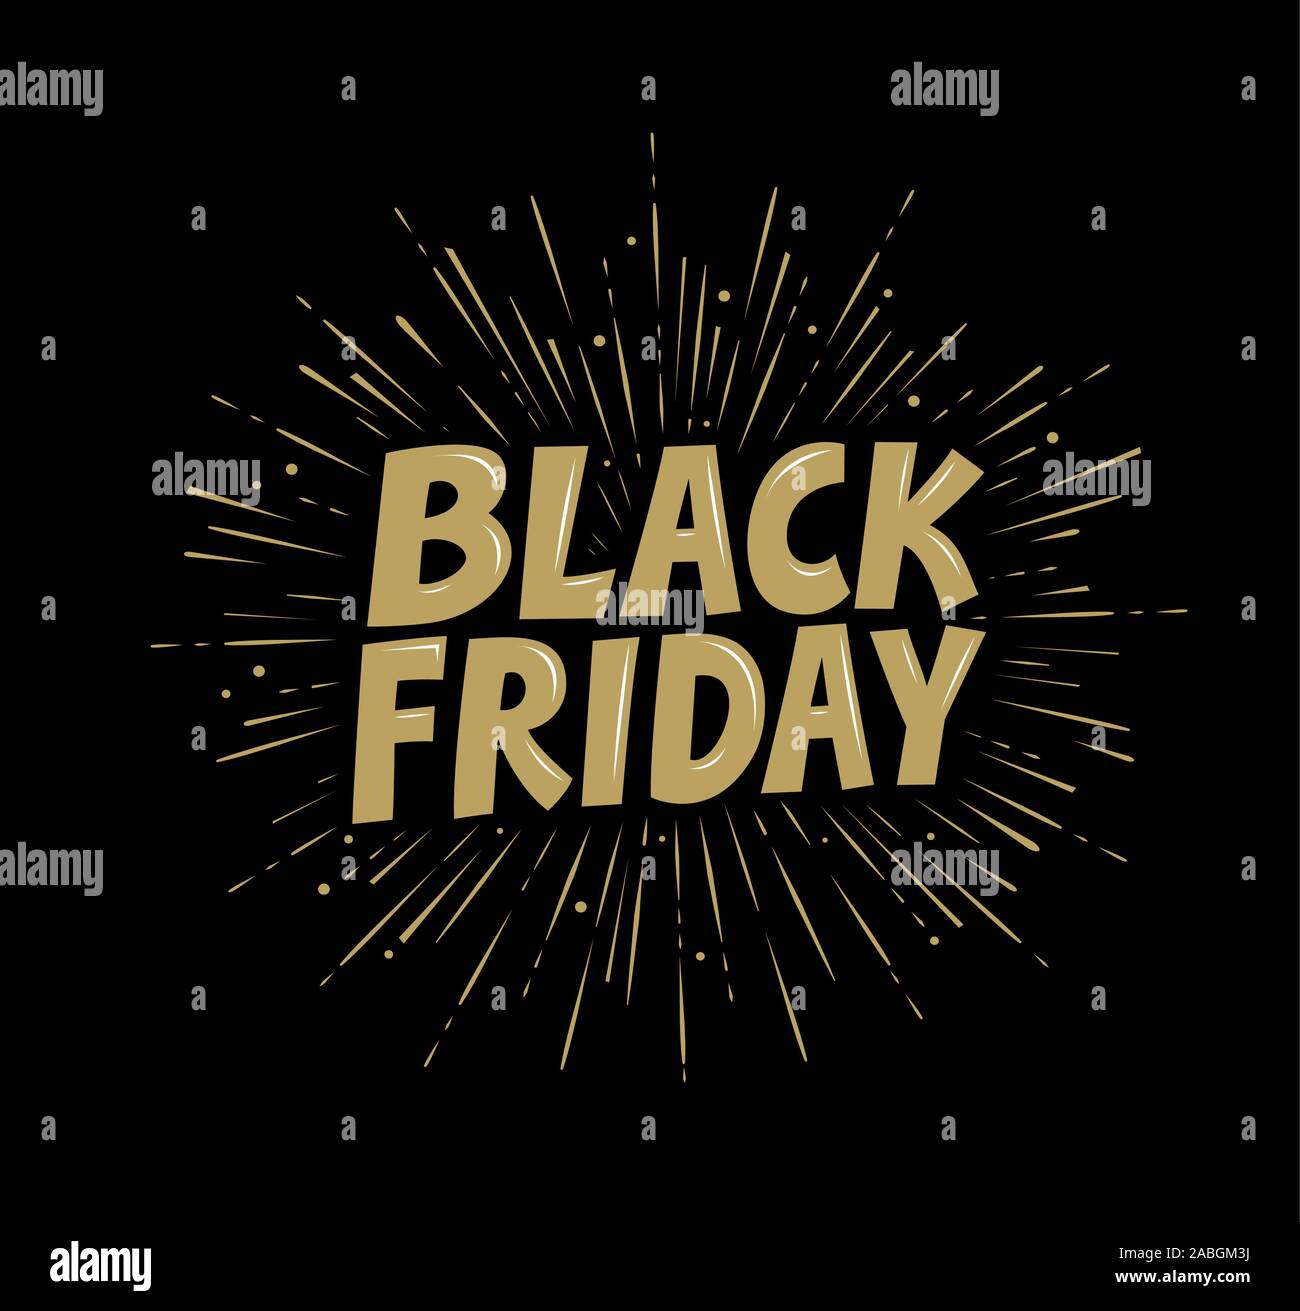 Black Friday banner. Typographic design vector illustration Stock Vector